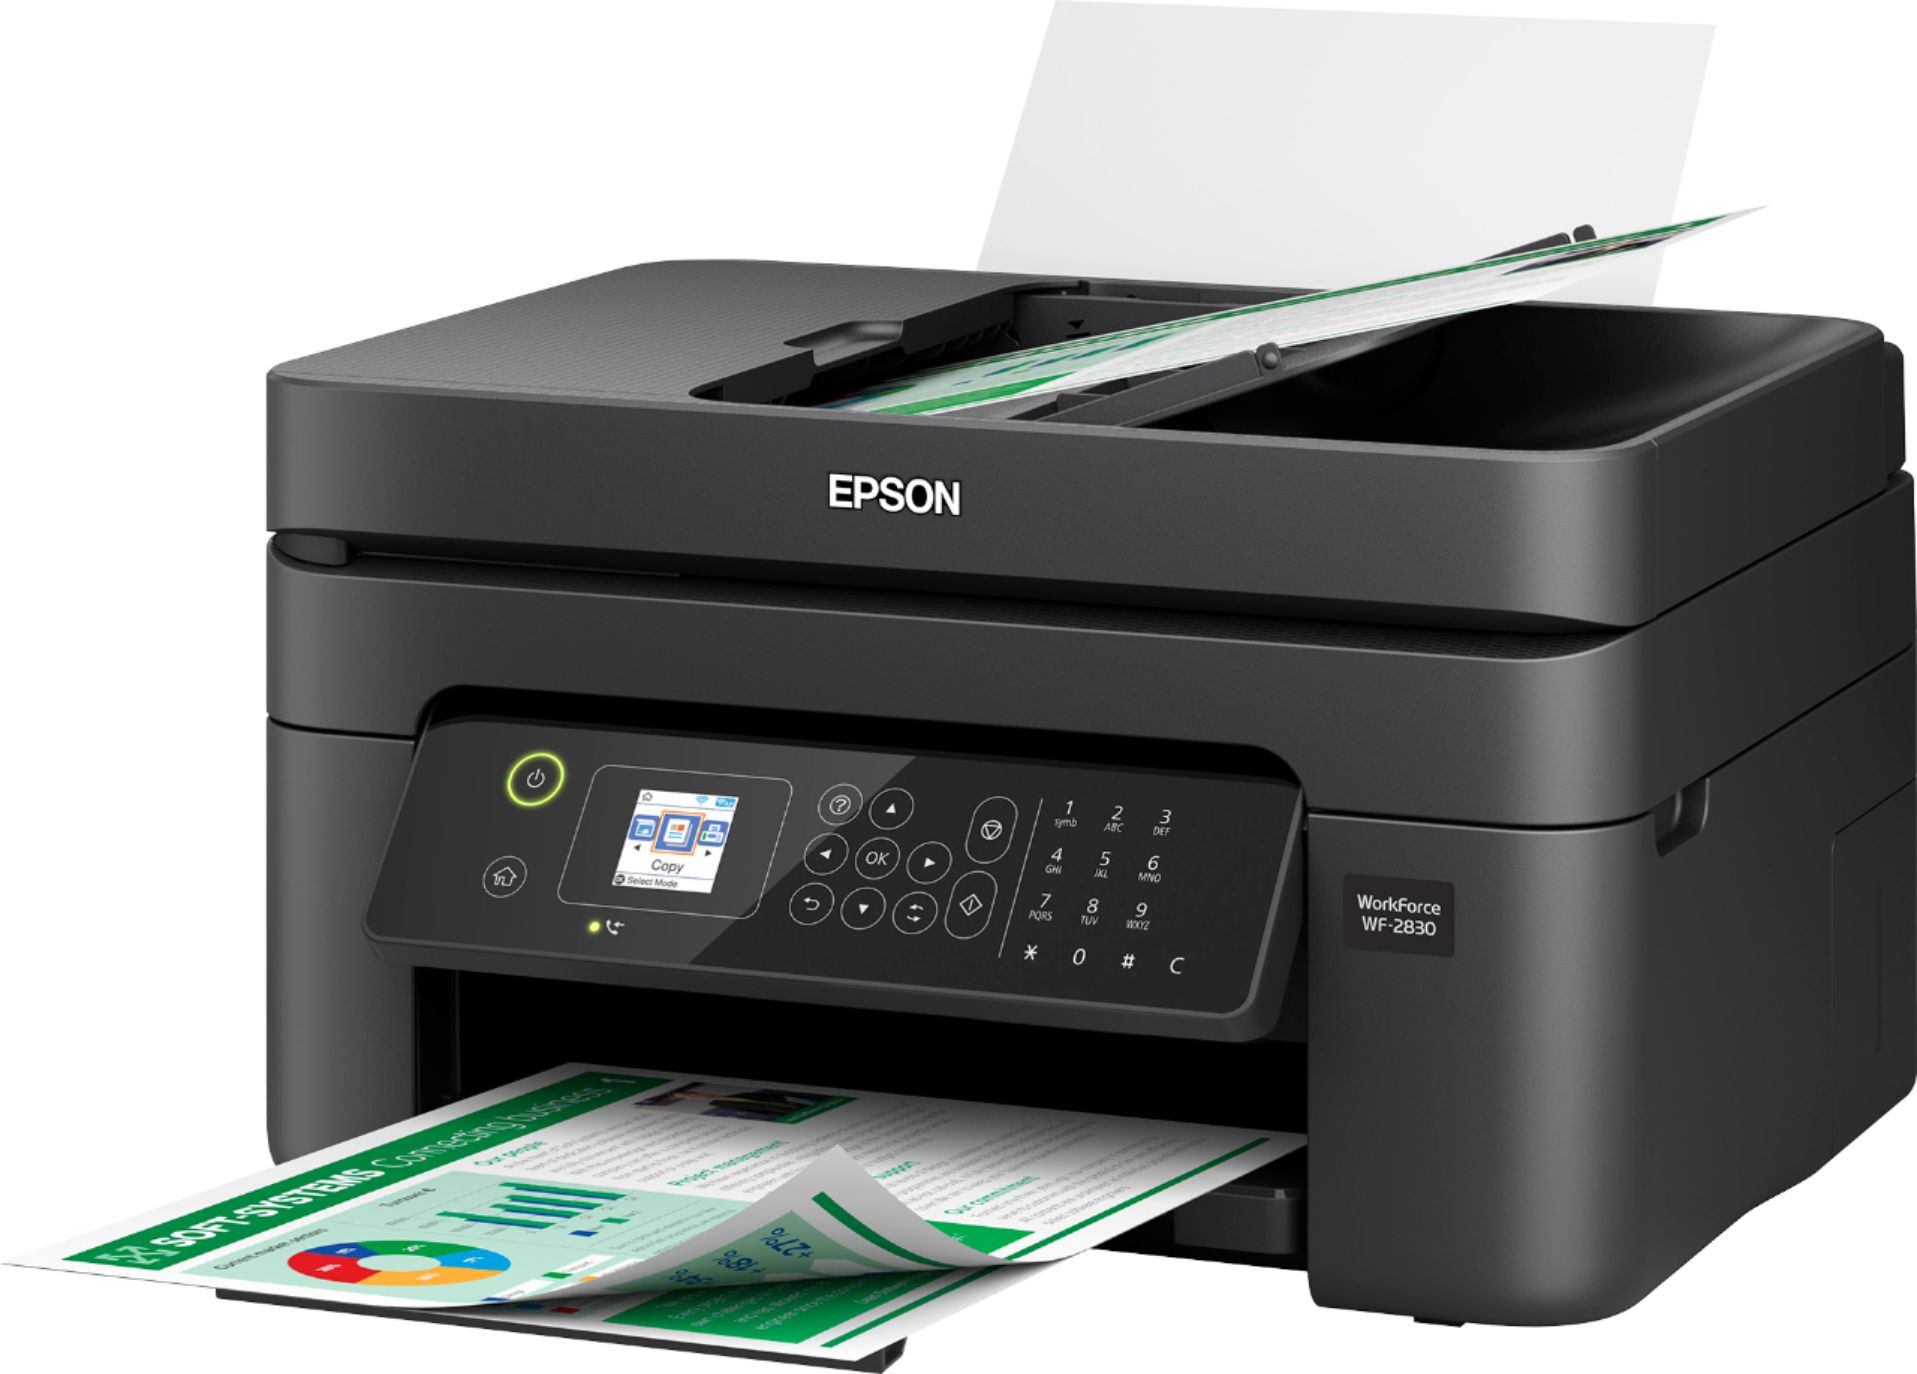 Fisker opbevaring pisk Best Buy: Epson WorkForce WF-2830 Wireless All-in-One Inkjet Printer Black  EPSON WF-2830 PRINTER C11CG302